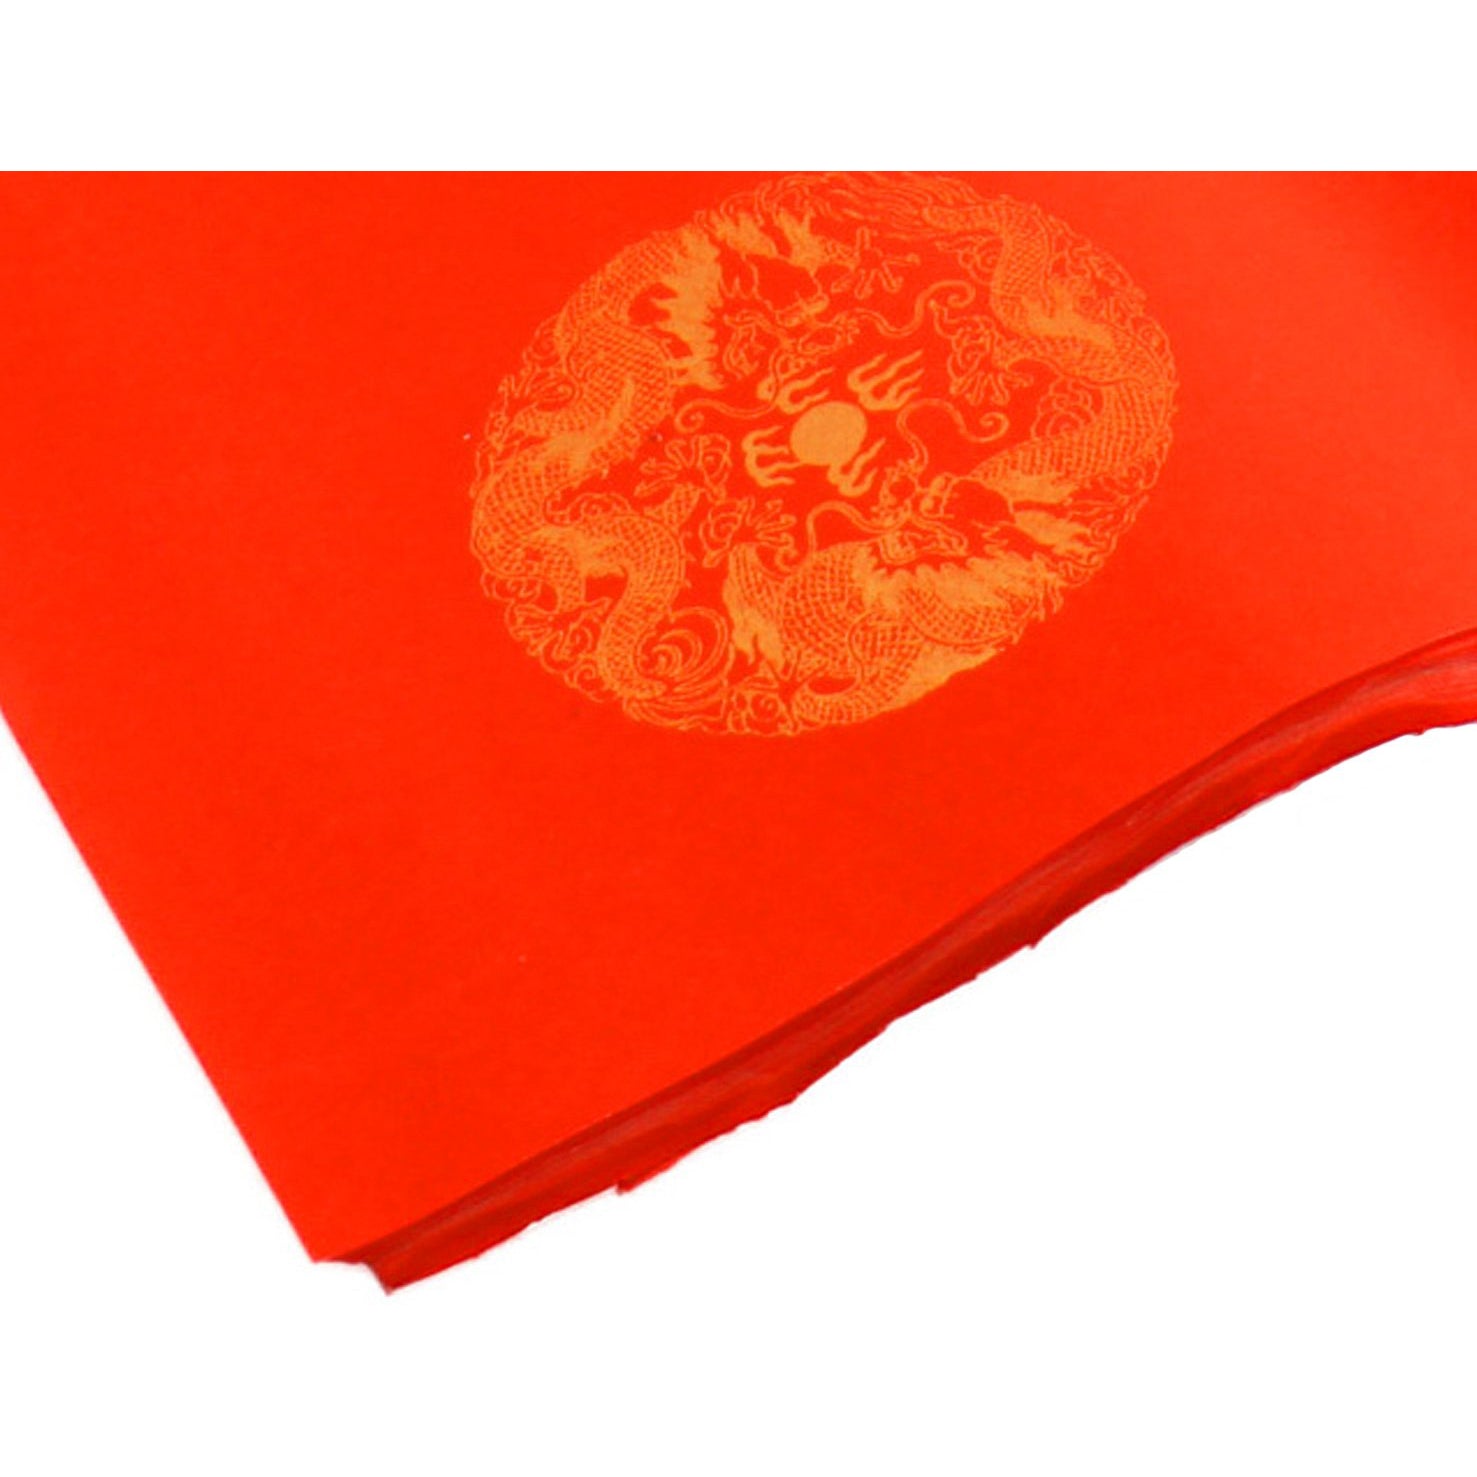 Red Shuen Paper (Xuan Paper) with Golden Dragon Ornaments